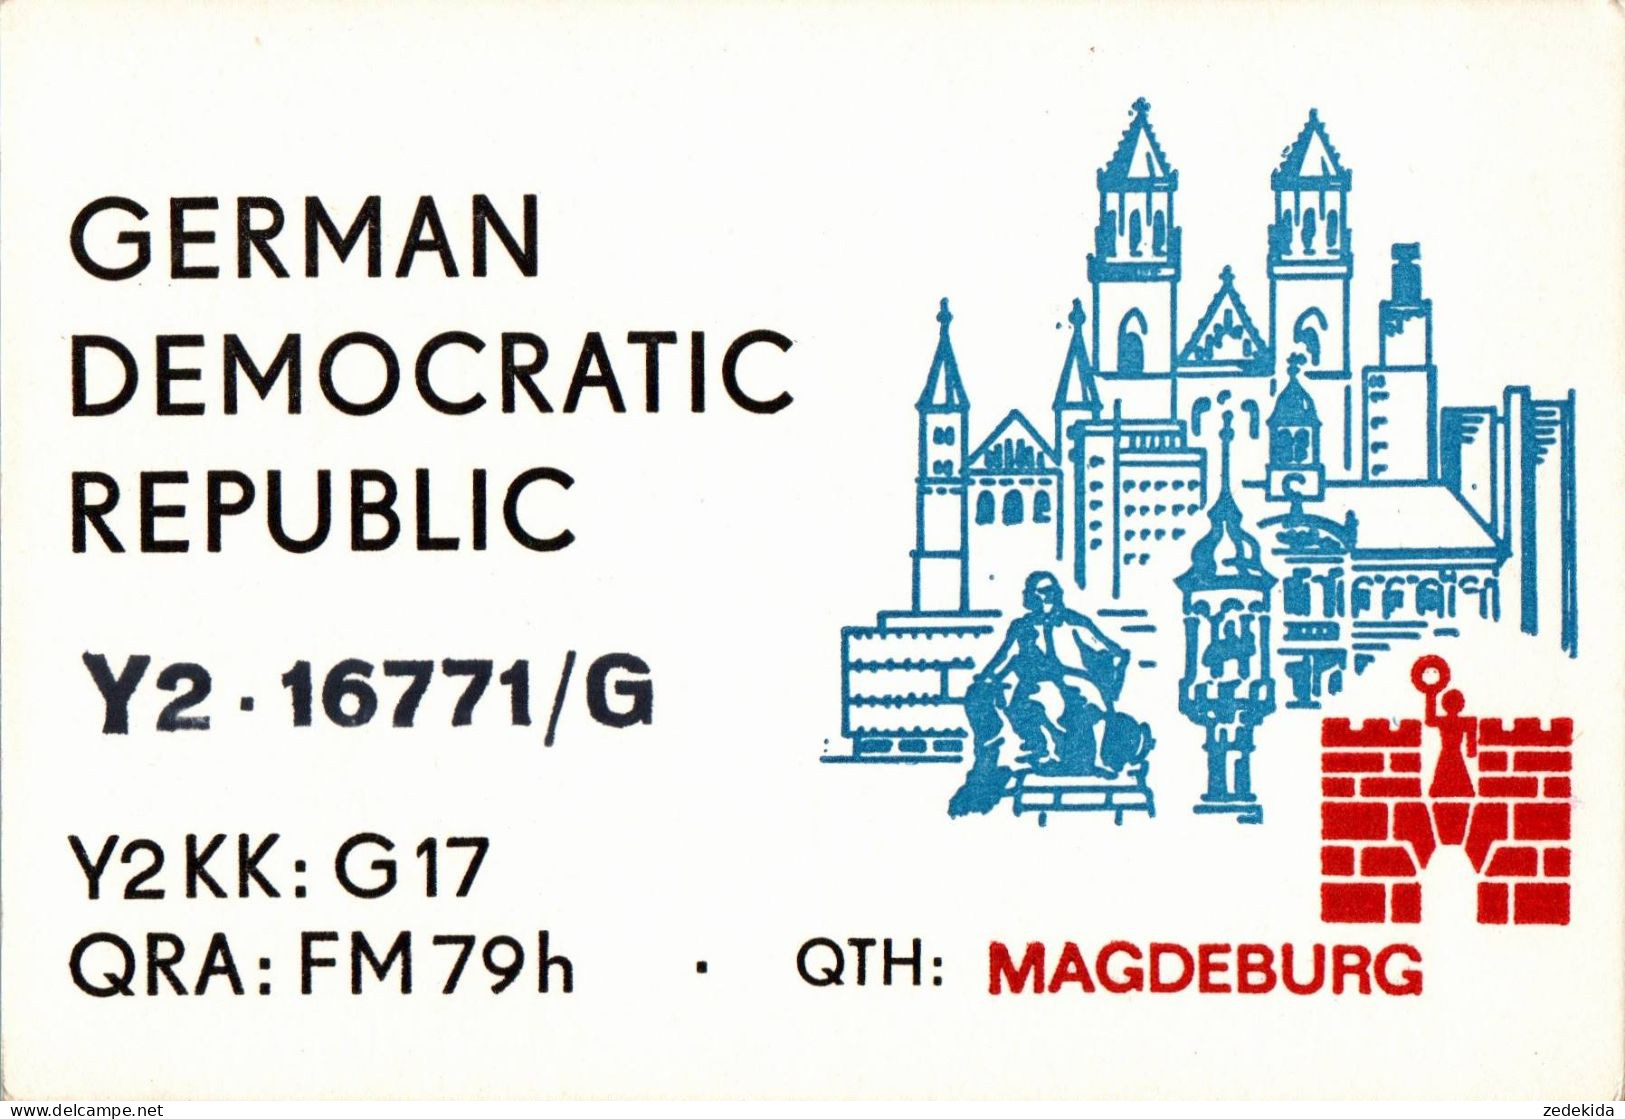 G6464 - Magdeburg - QSL Amateurfunkerkarte Radio Funkerkarte - DDR German Democratic Republic - Verlag DDR - Radio